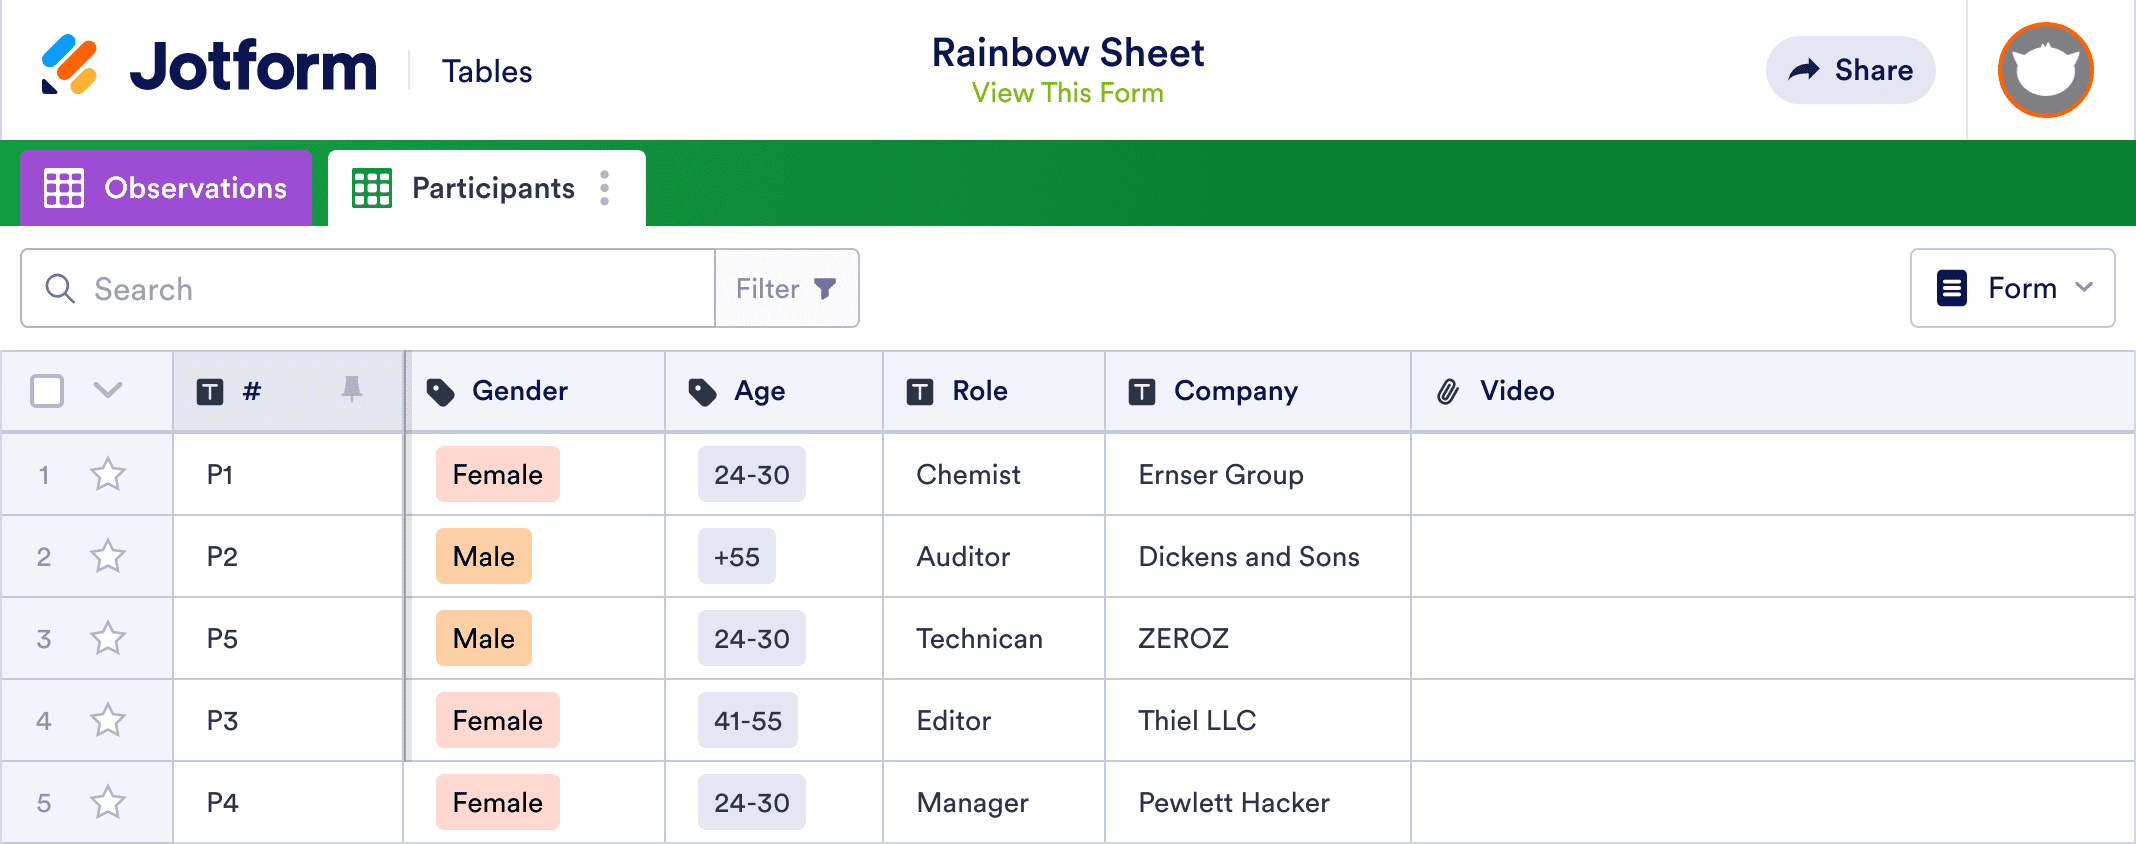 Rainbow Sheet Template | Jotform Tables